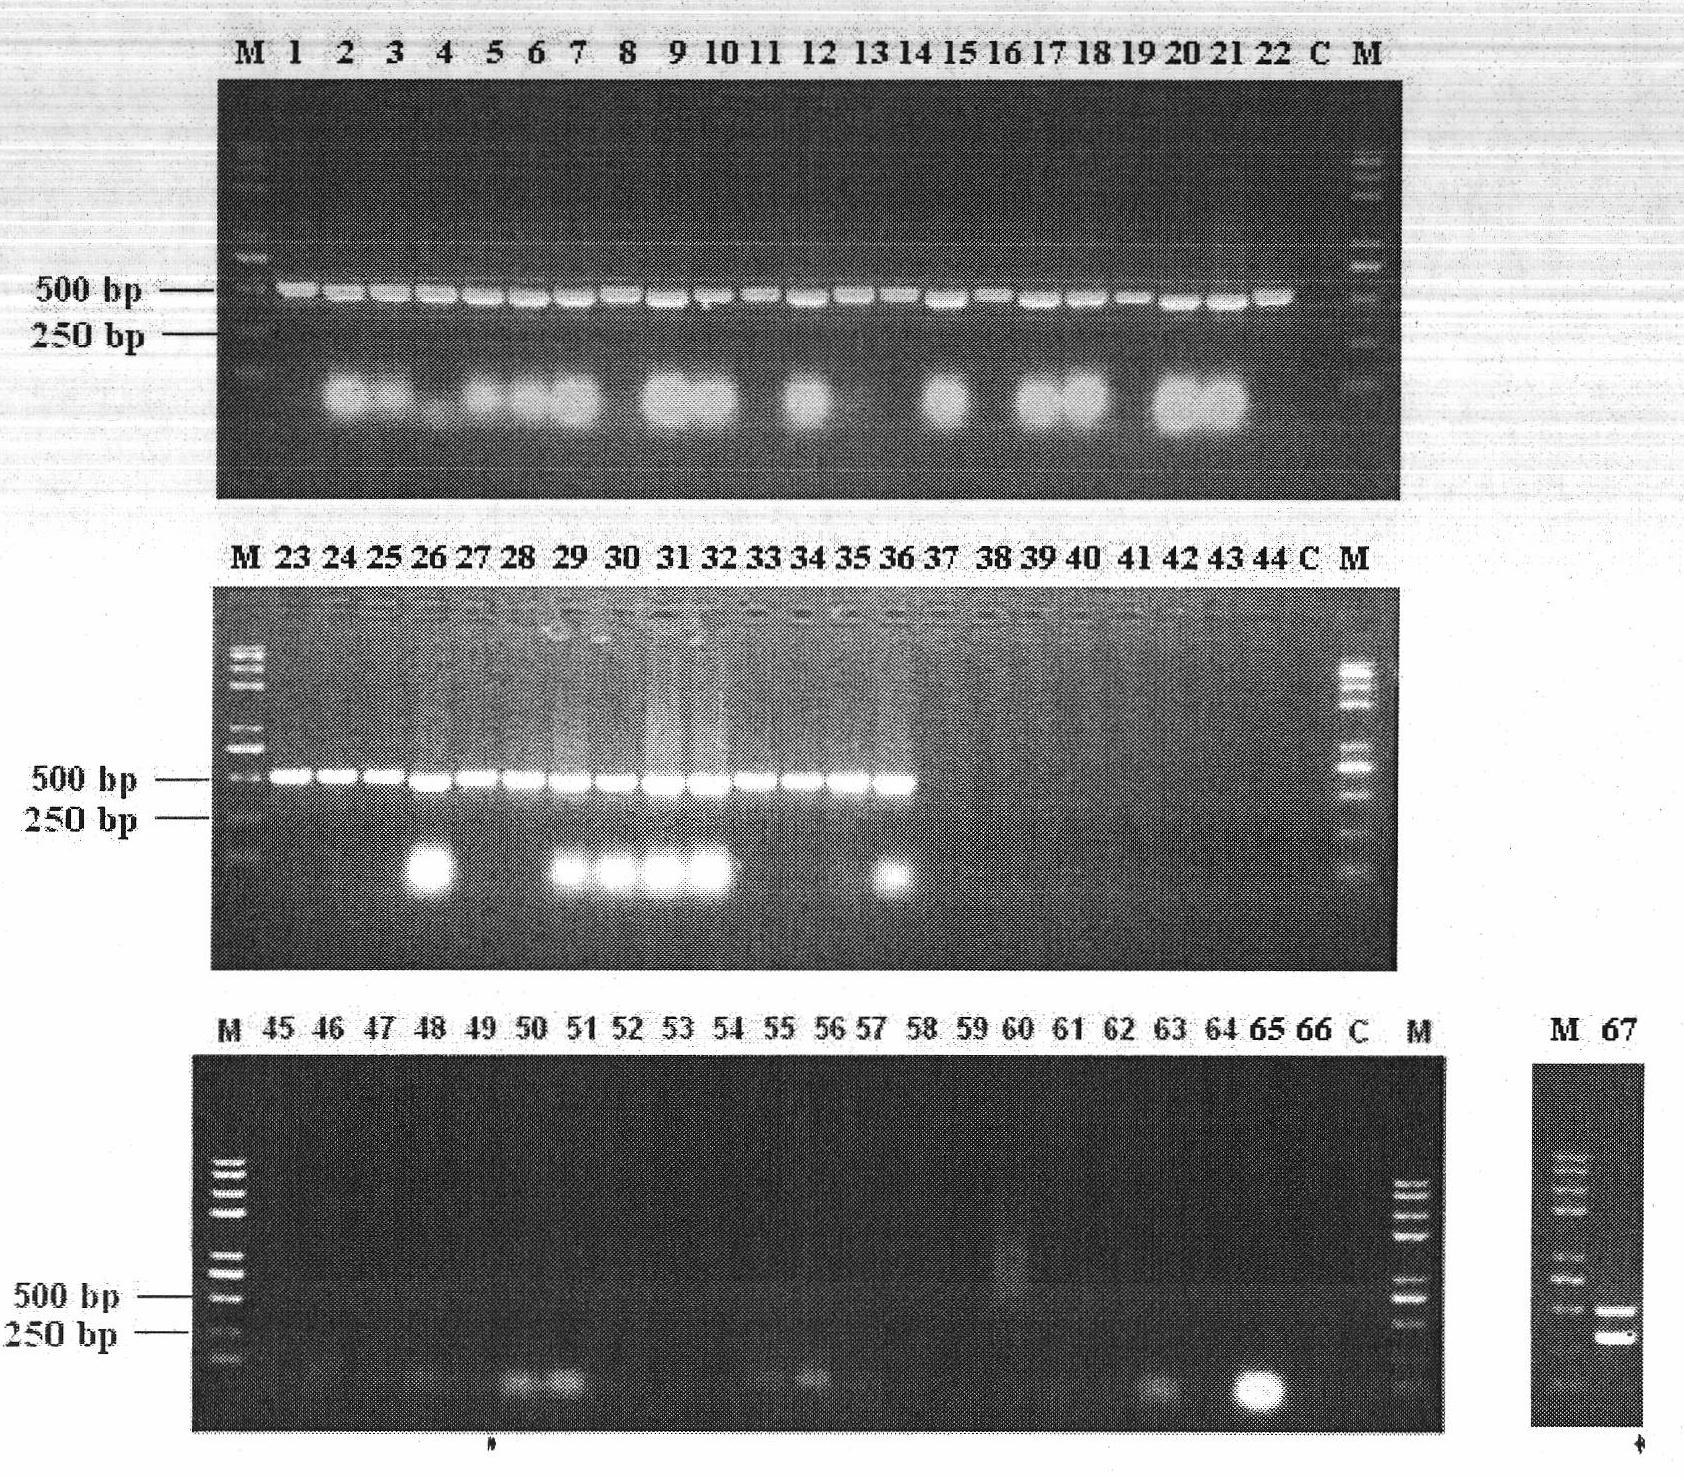 Primer sequences for detecting Edwardsiella tarda, Edwardsiella ictarda or pathogenic Edwardsiella tarda, and detection method and application thereof